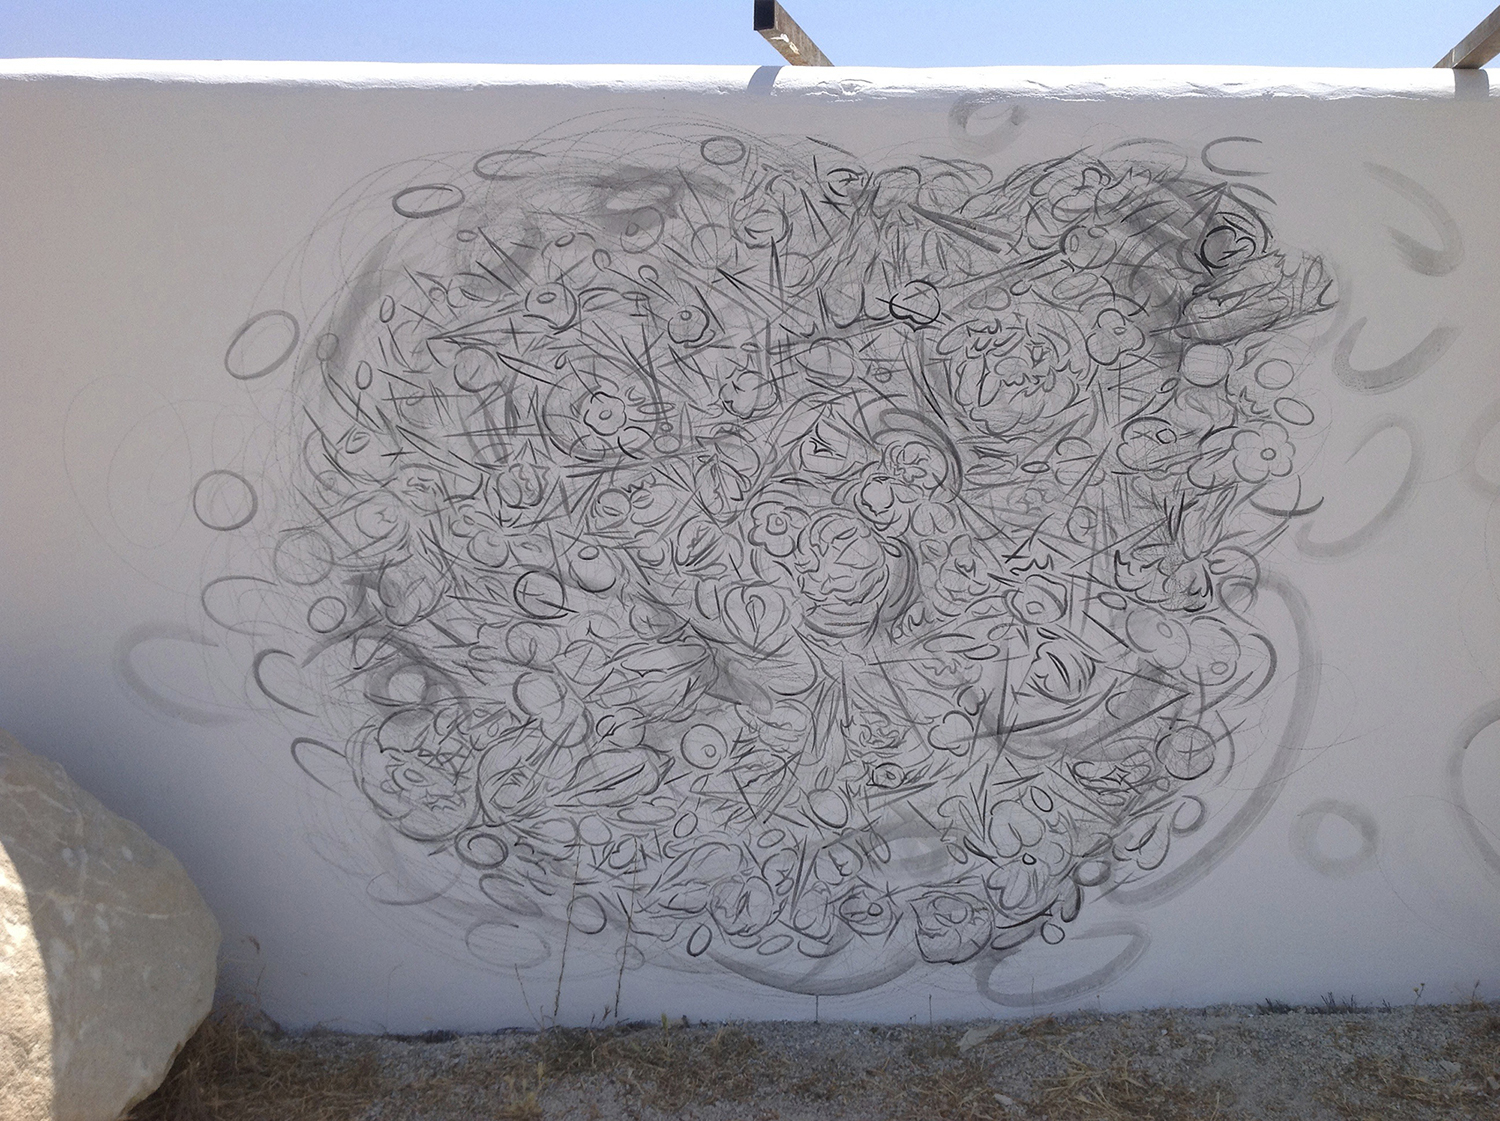    SUNBURST,  2013, acrylic on wall.&nbsp;   Joya: arte + ecología, &nbsp;Cortijada Los Gázquez, Vélez Blanco (Almería), Spain  